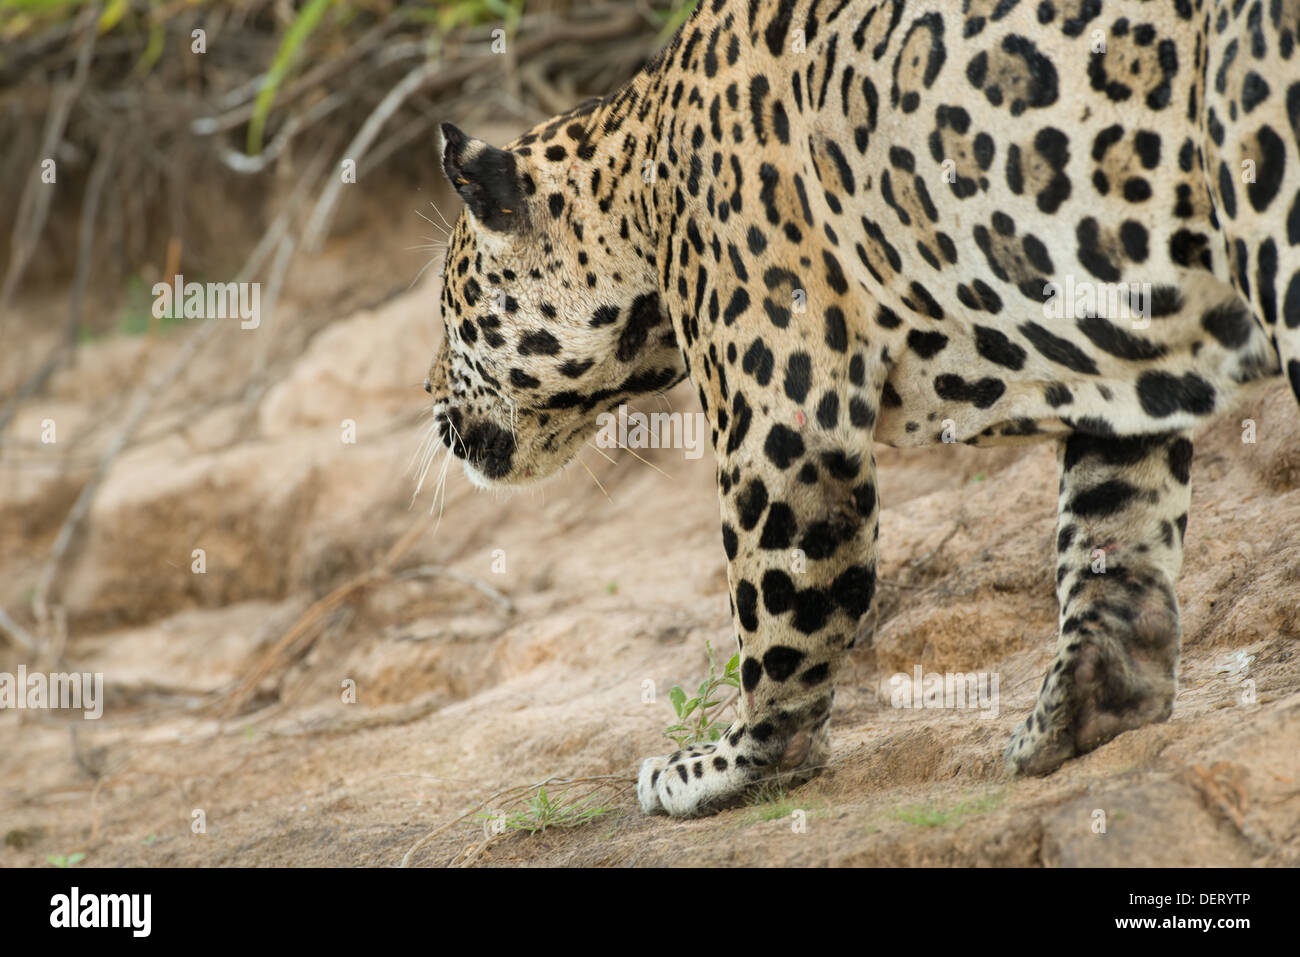 Stock Foto von einem Jaguar stalking Beute, Pantanal, Brasilien. Stockfoto